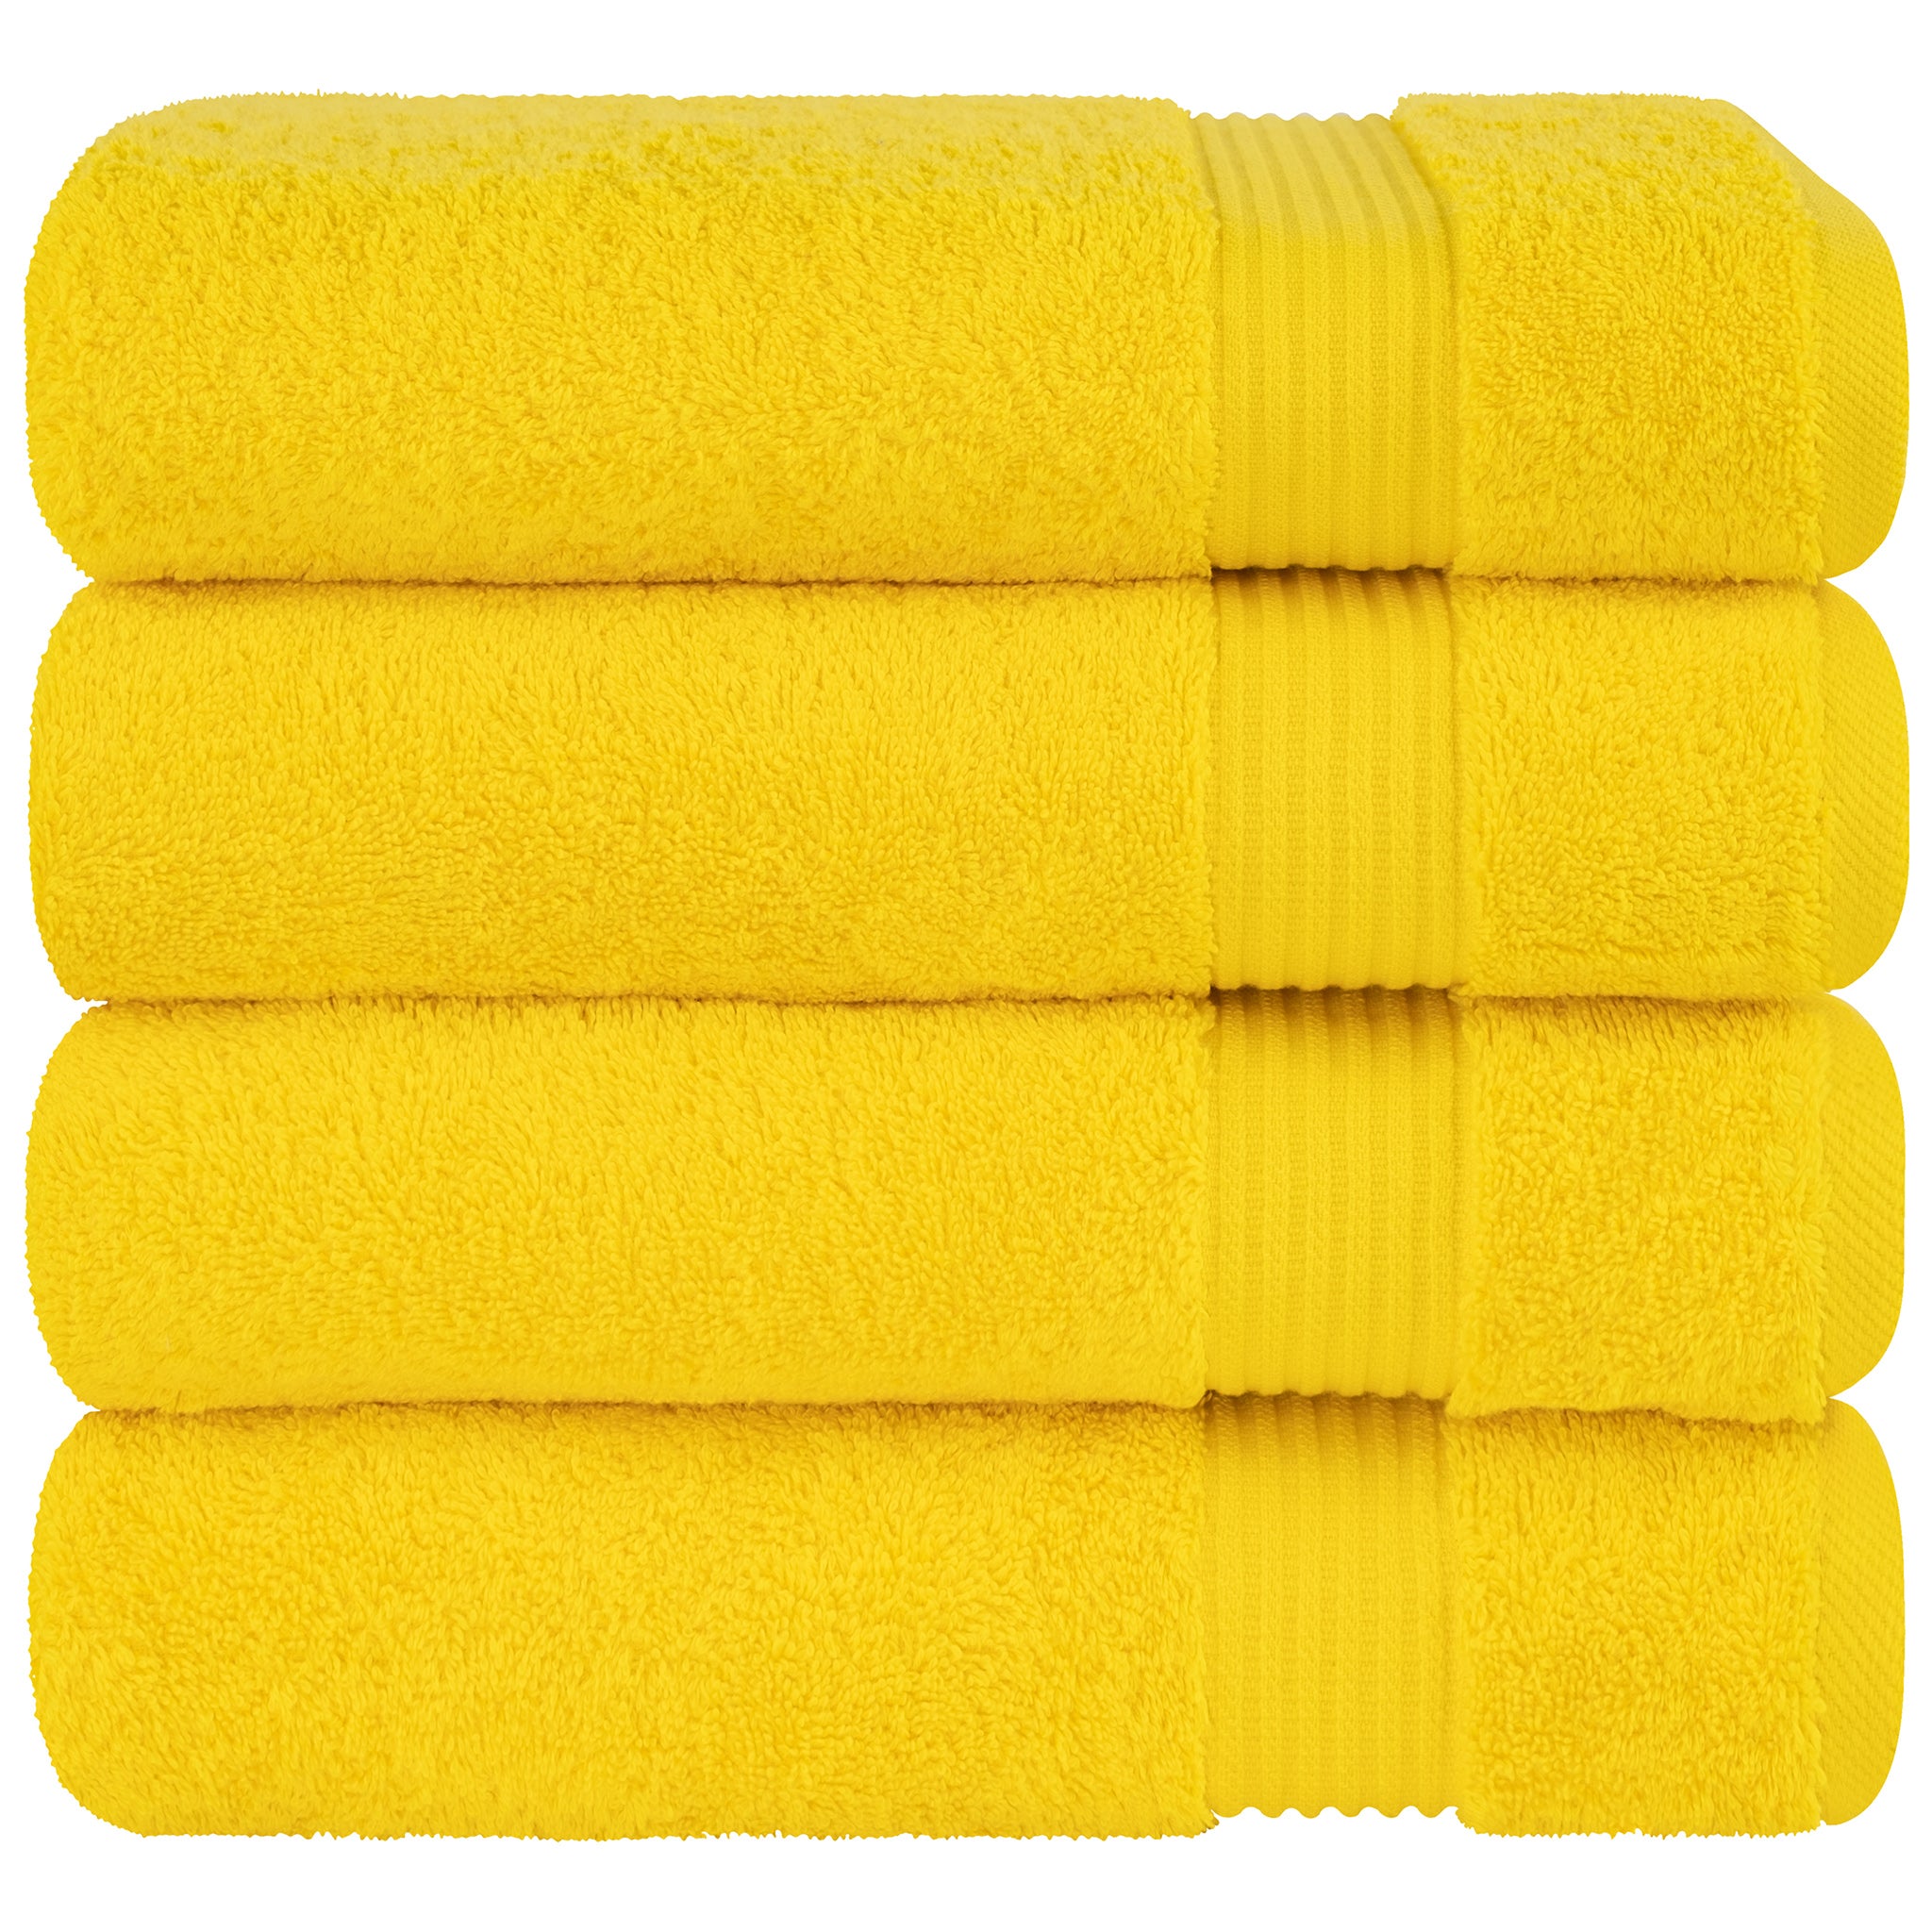 American Soft Linen Bekos 100% Cotton Turkish Towels, 4 Piece Bath Towel Set -turquoise-yellow-06